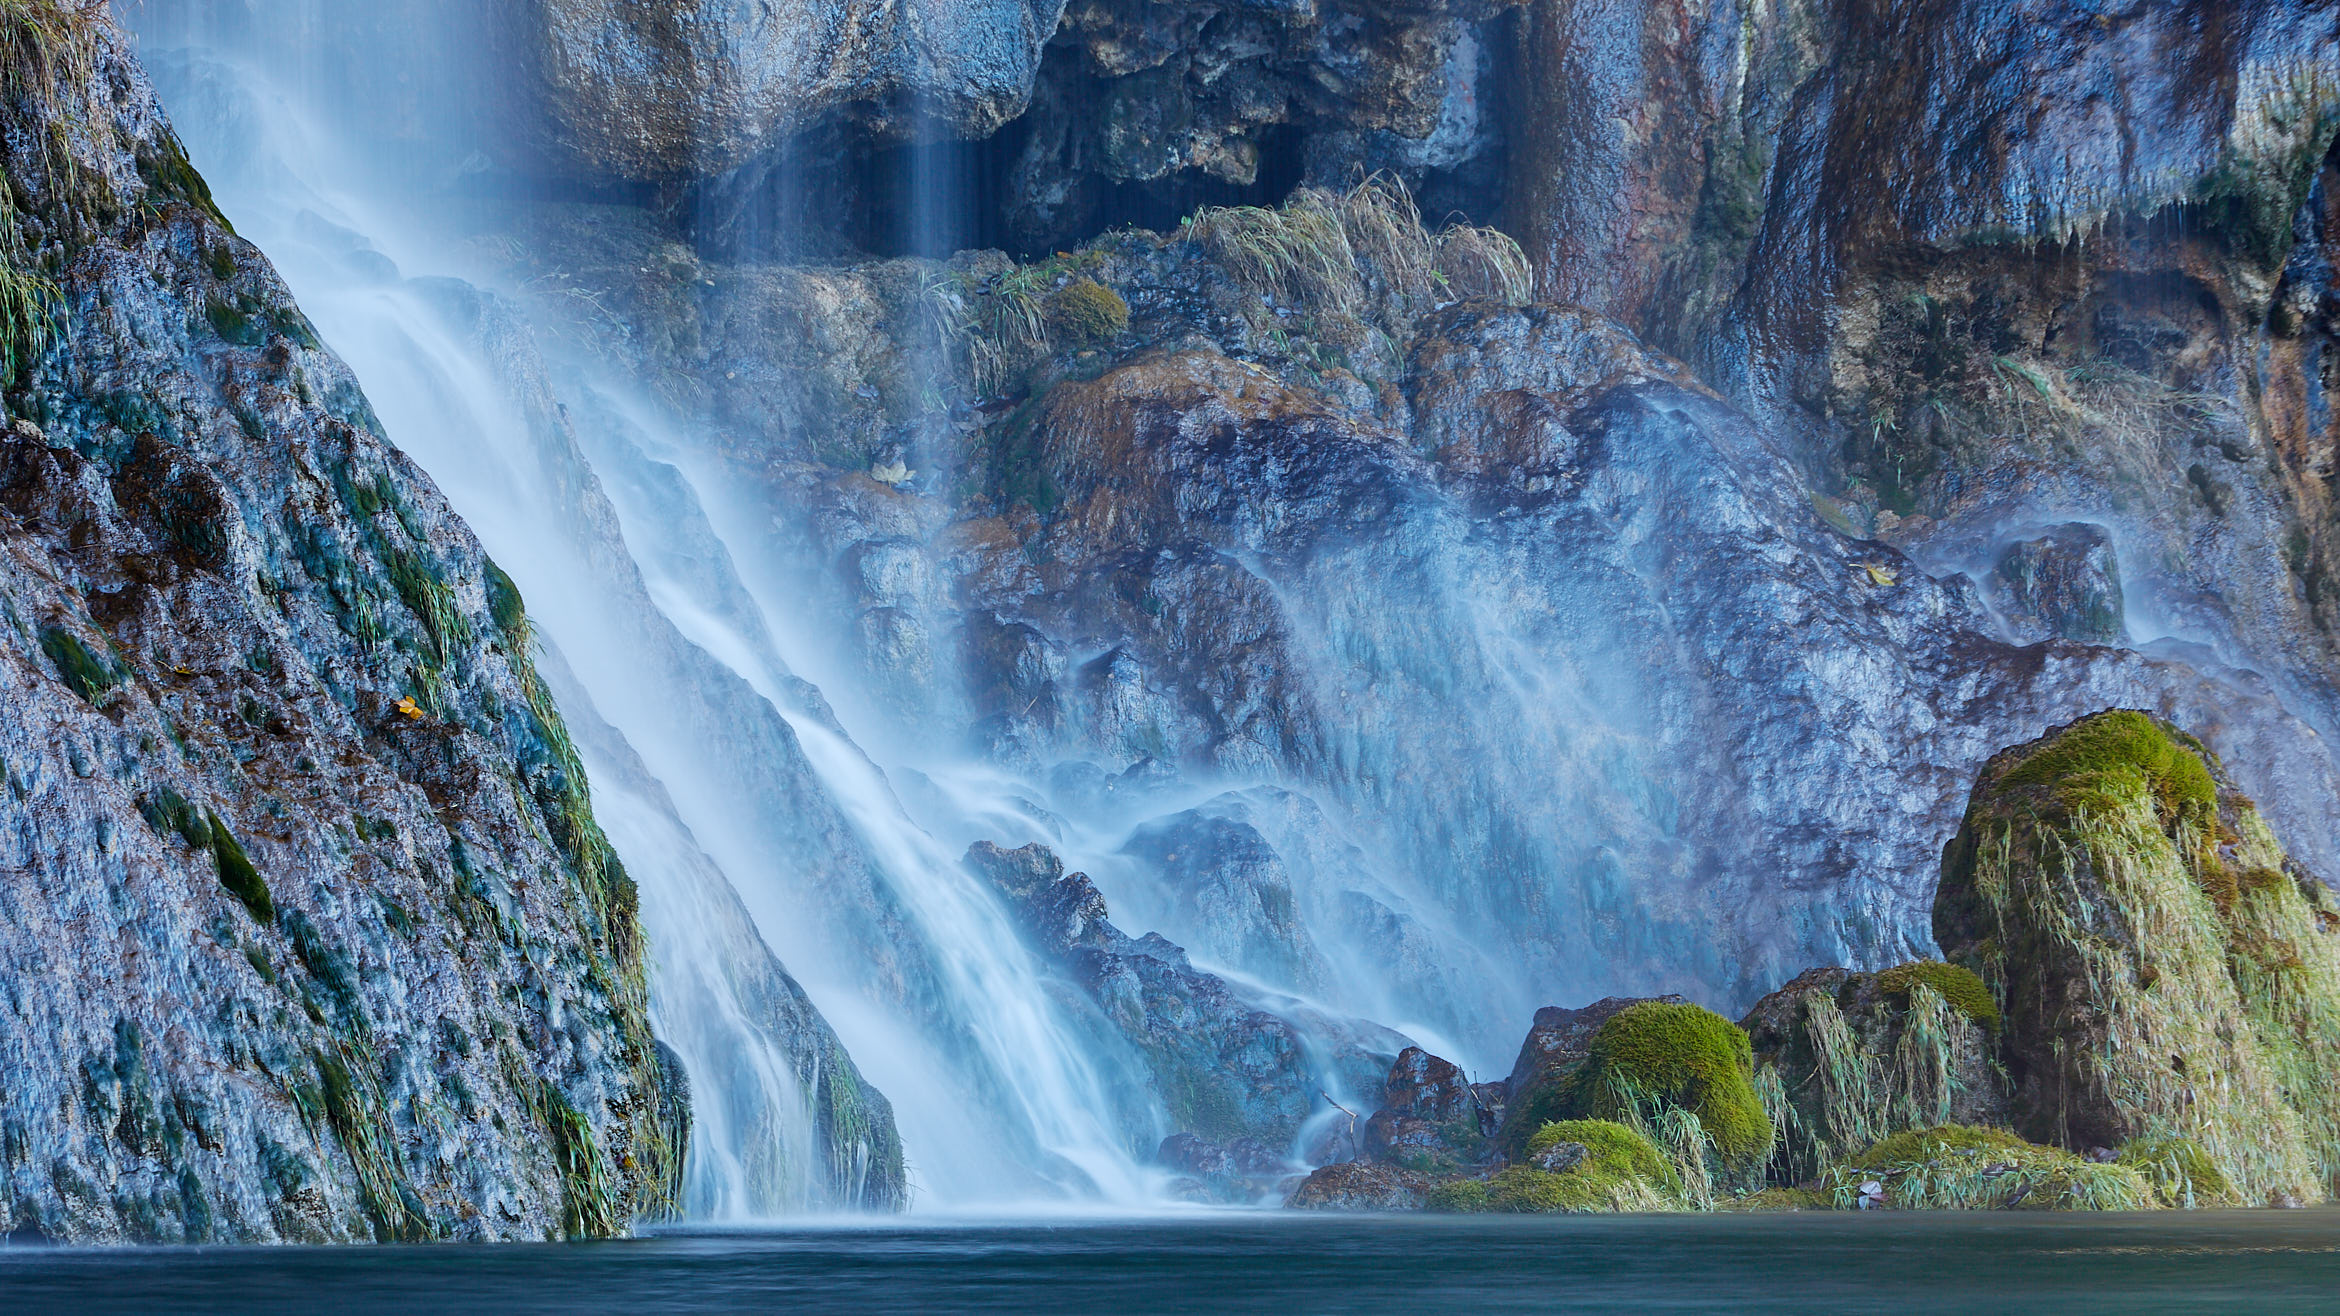 Bottom of the waterfall / High Stone Gallery / © Ian Daisley